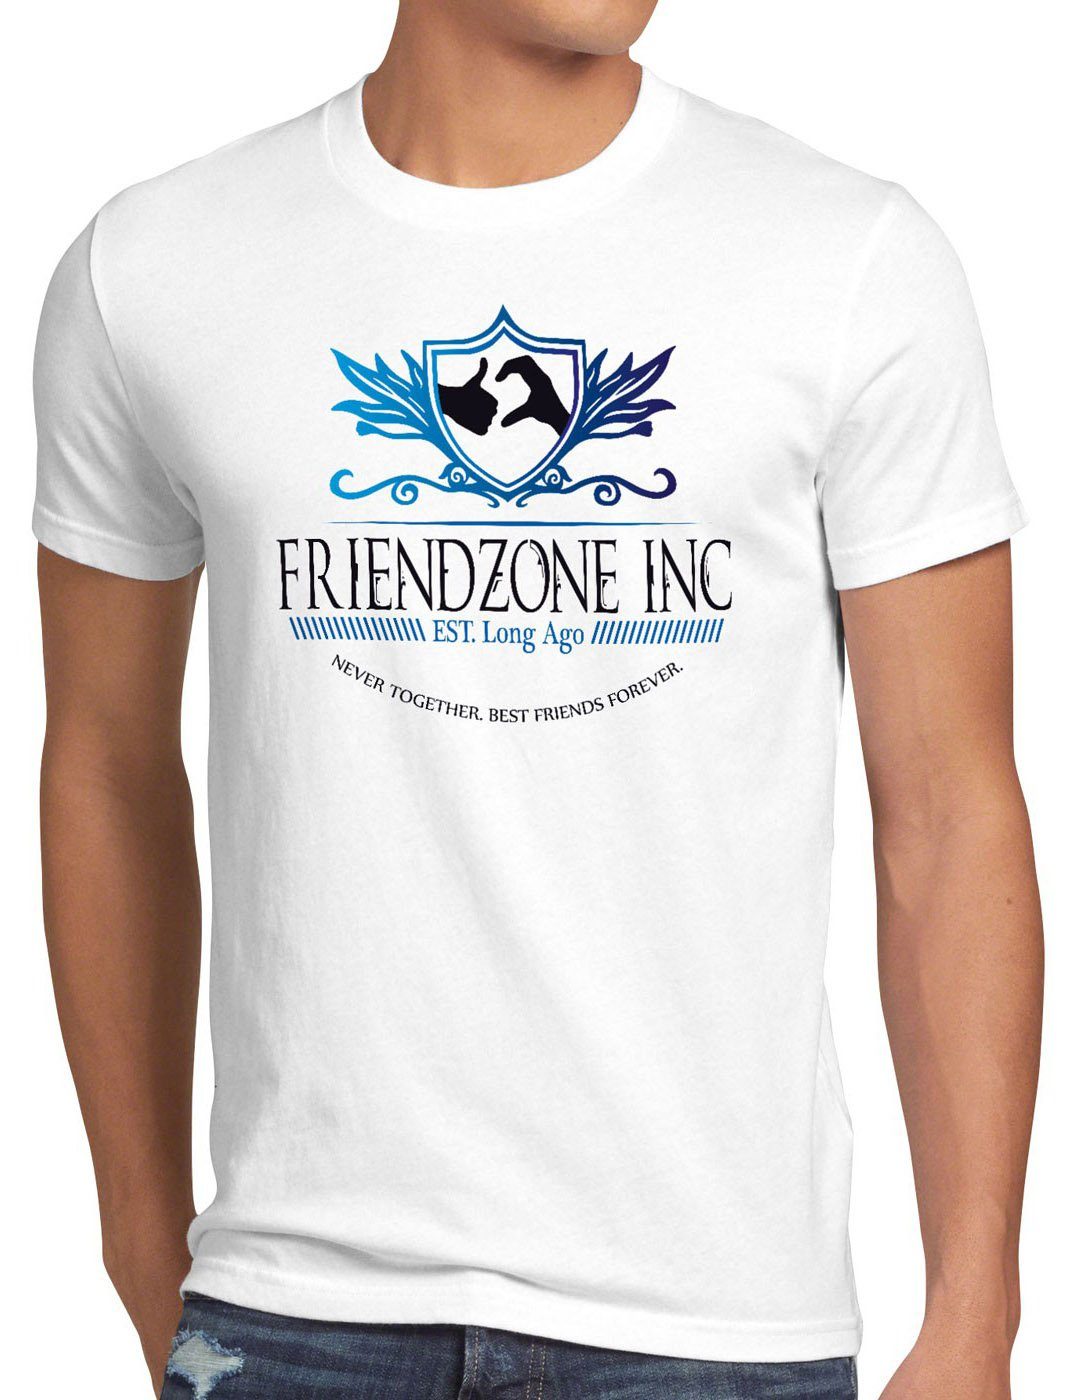 9gag style3 Brotherhood Beste Herren Bro Zone Friend meme gamer T-Shirt weiß Print-Shirt Brother Freunde